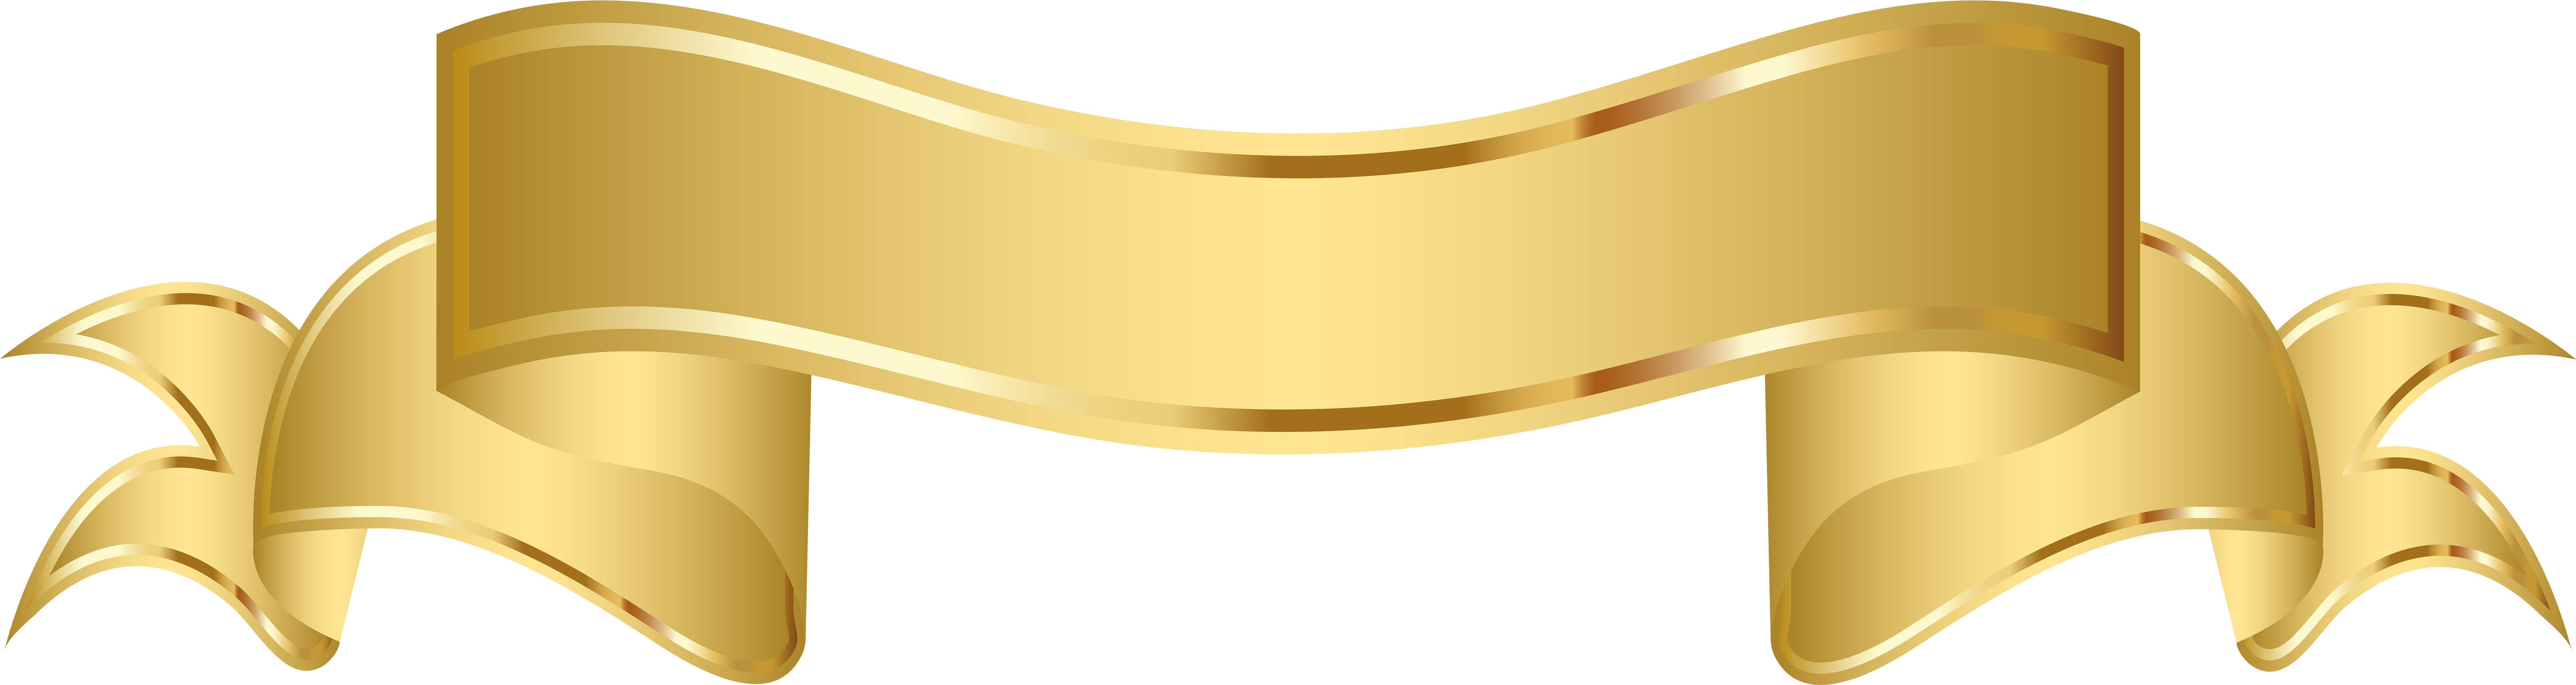 Elegant Gold Banner Graphic